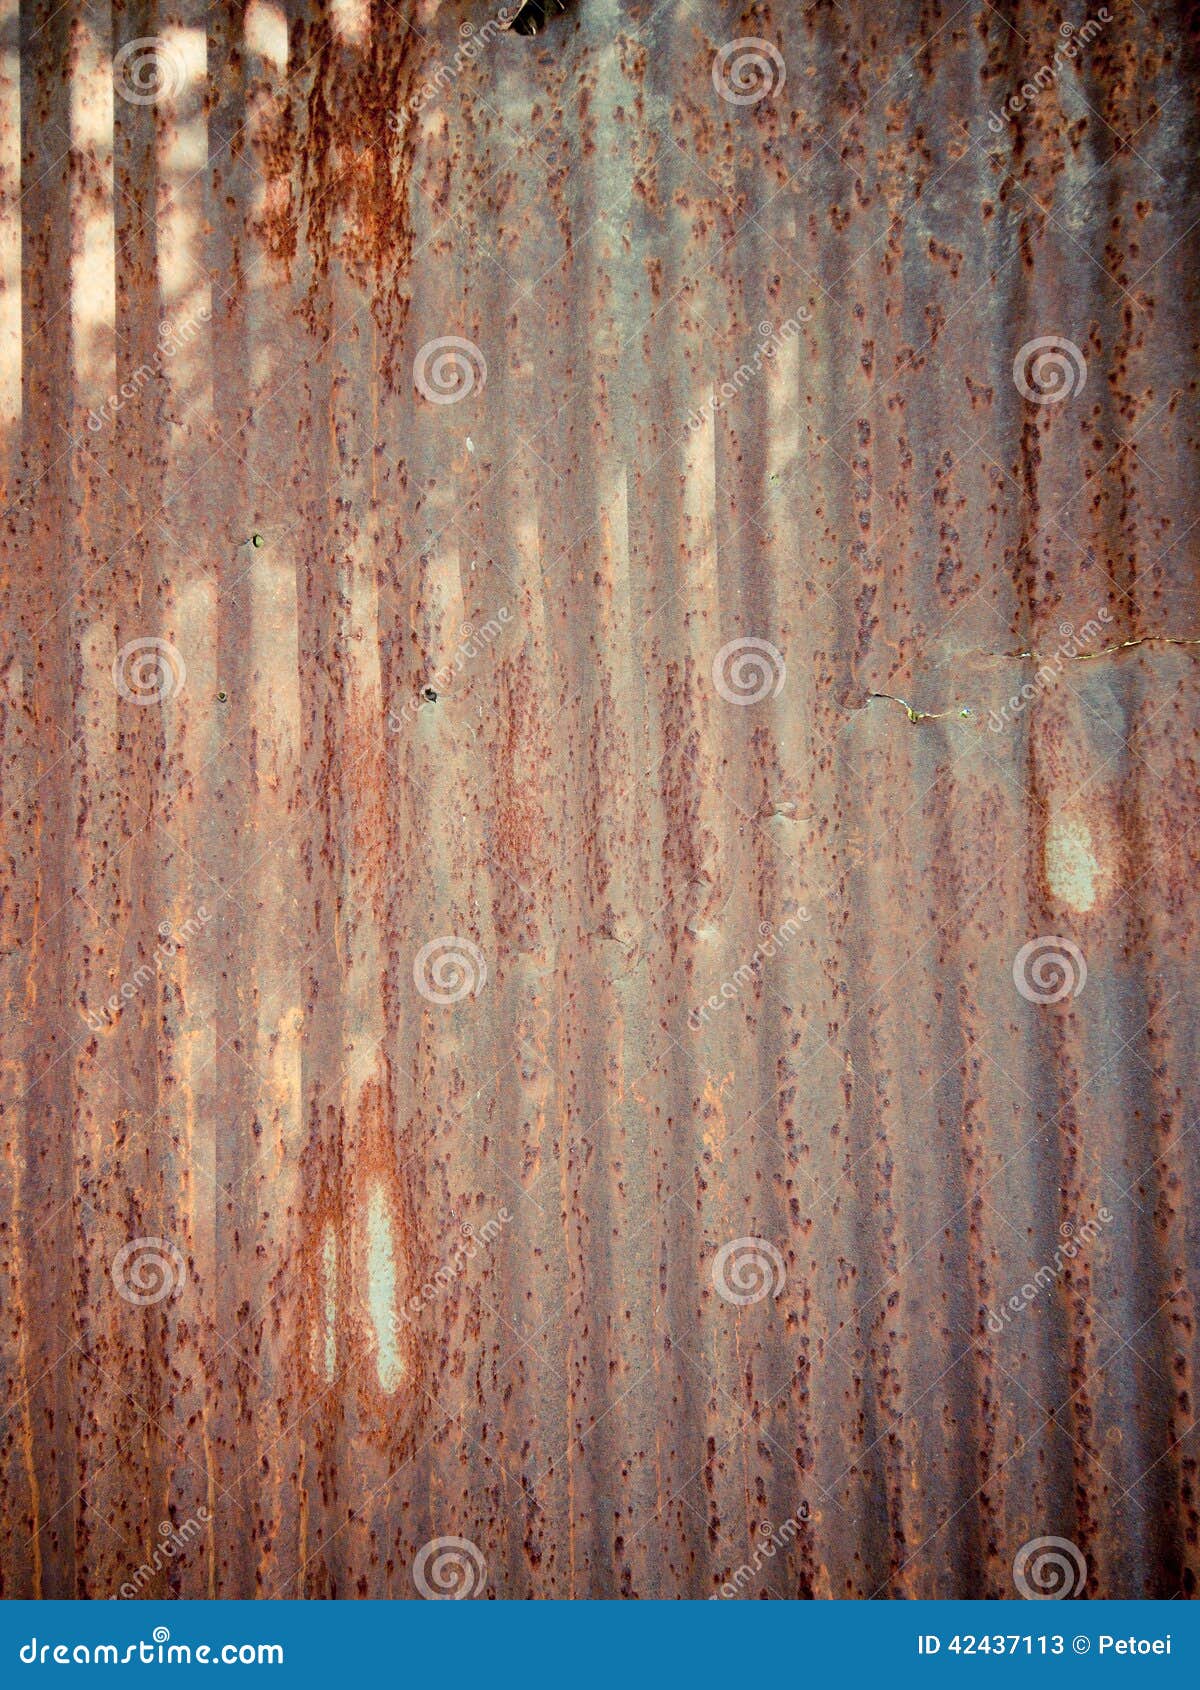 Can sheet metal rust фото 29